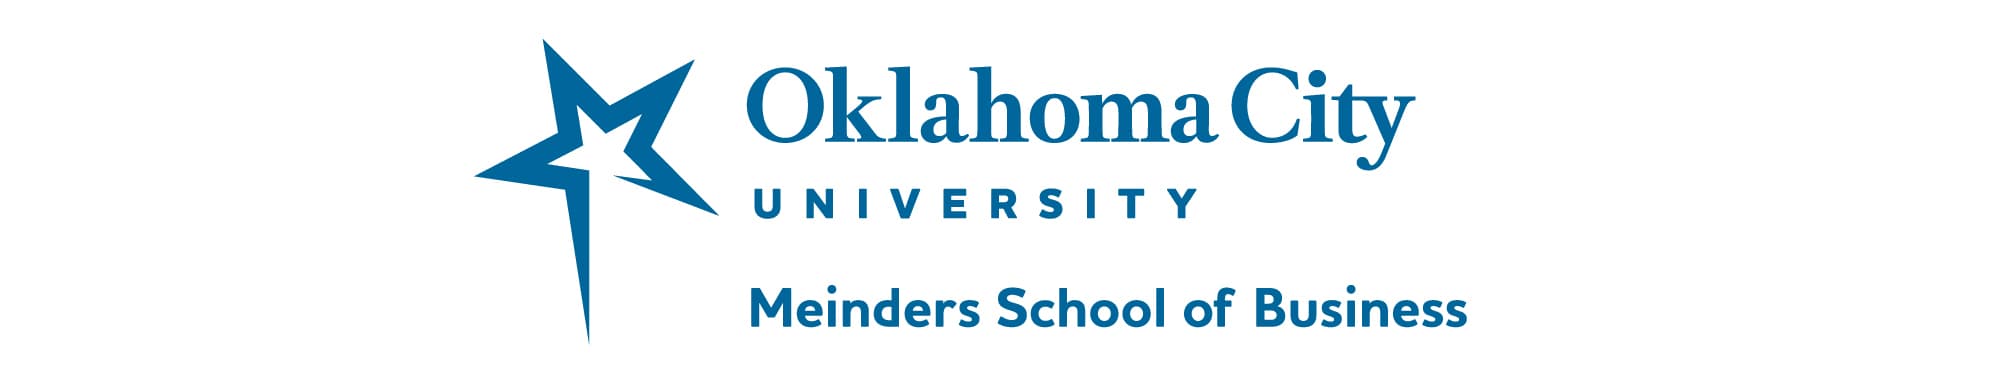 Oklahoma City University - Meinders School of Business logo header